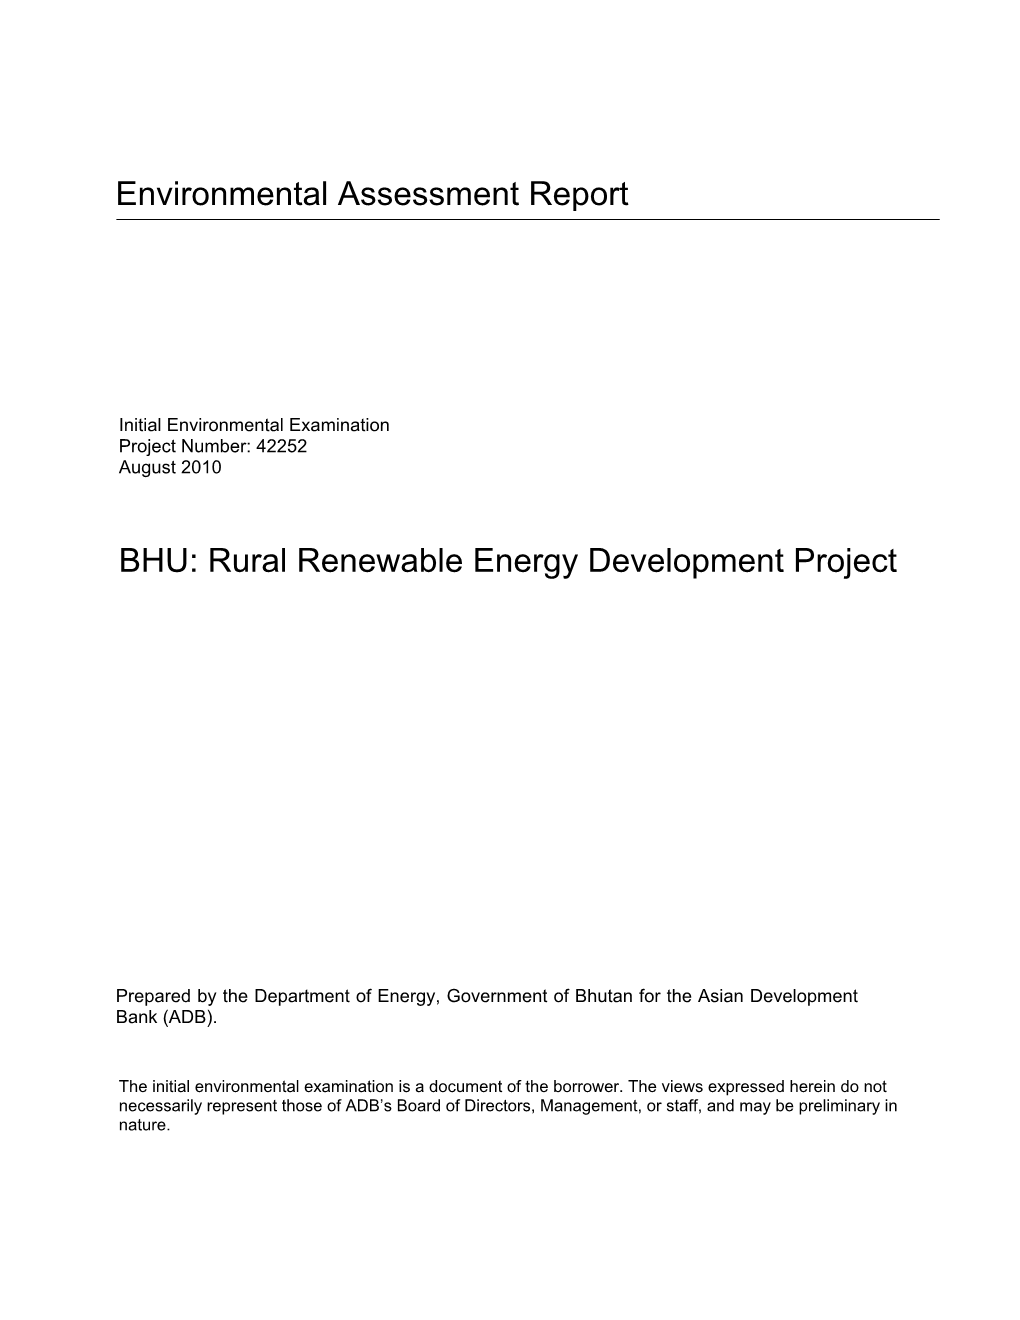 Initial Environmental Examination: Bhutan, Wind Power Pilot Project